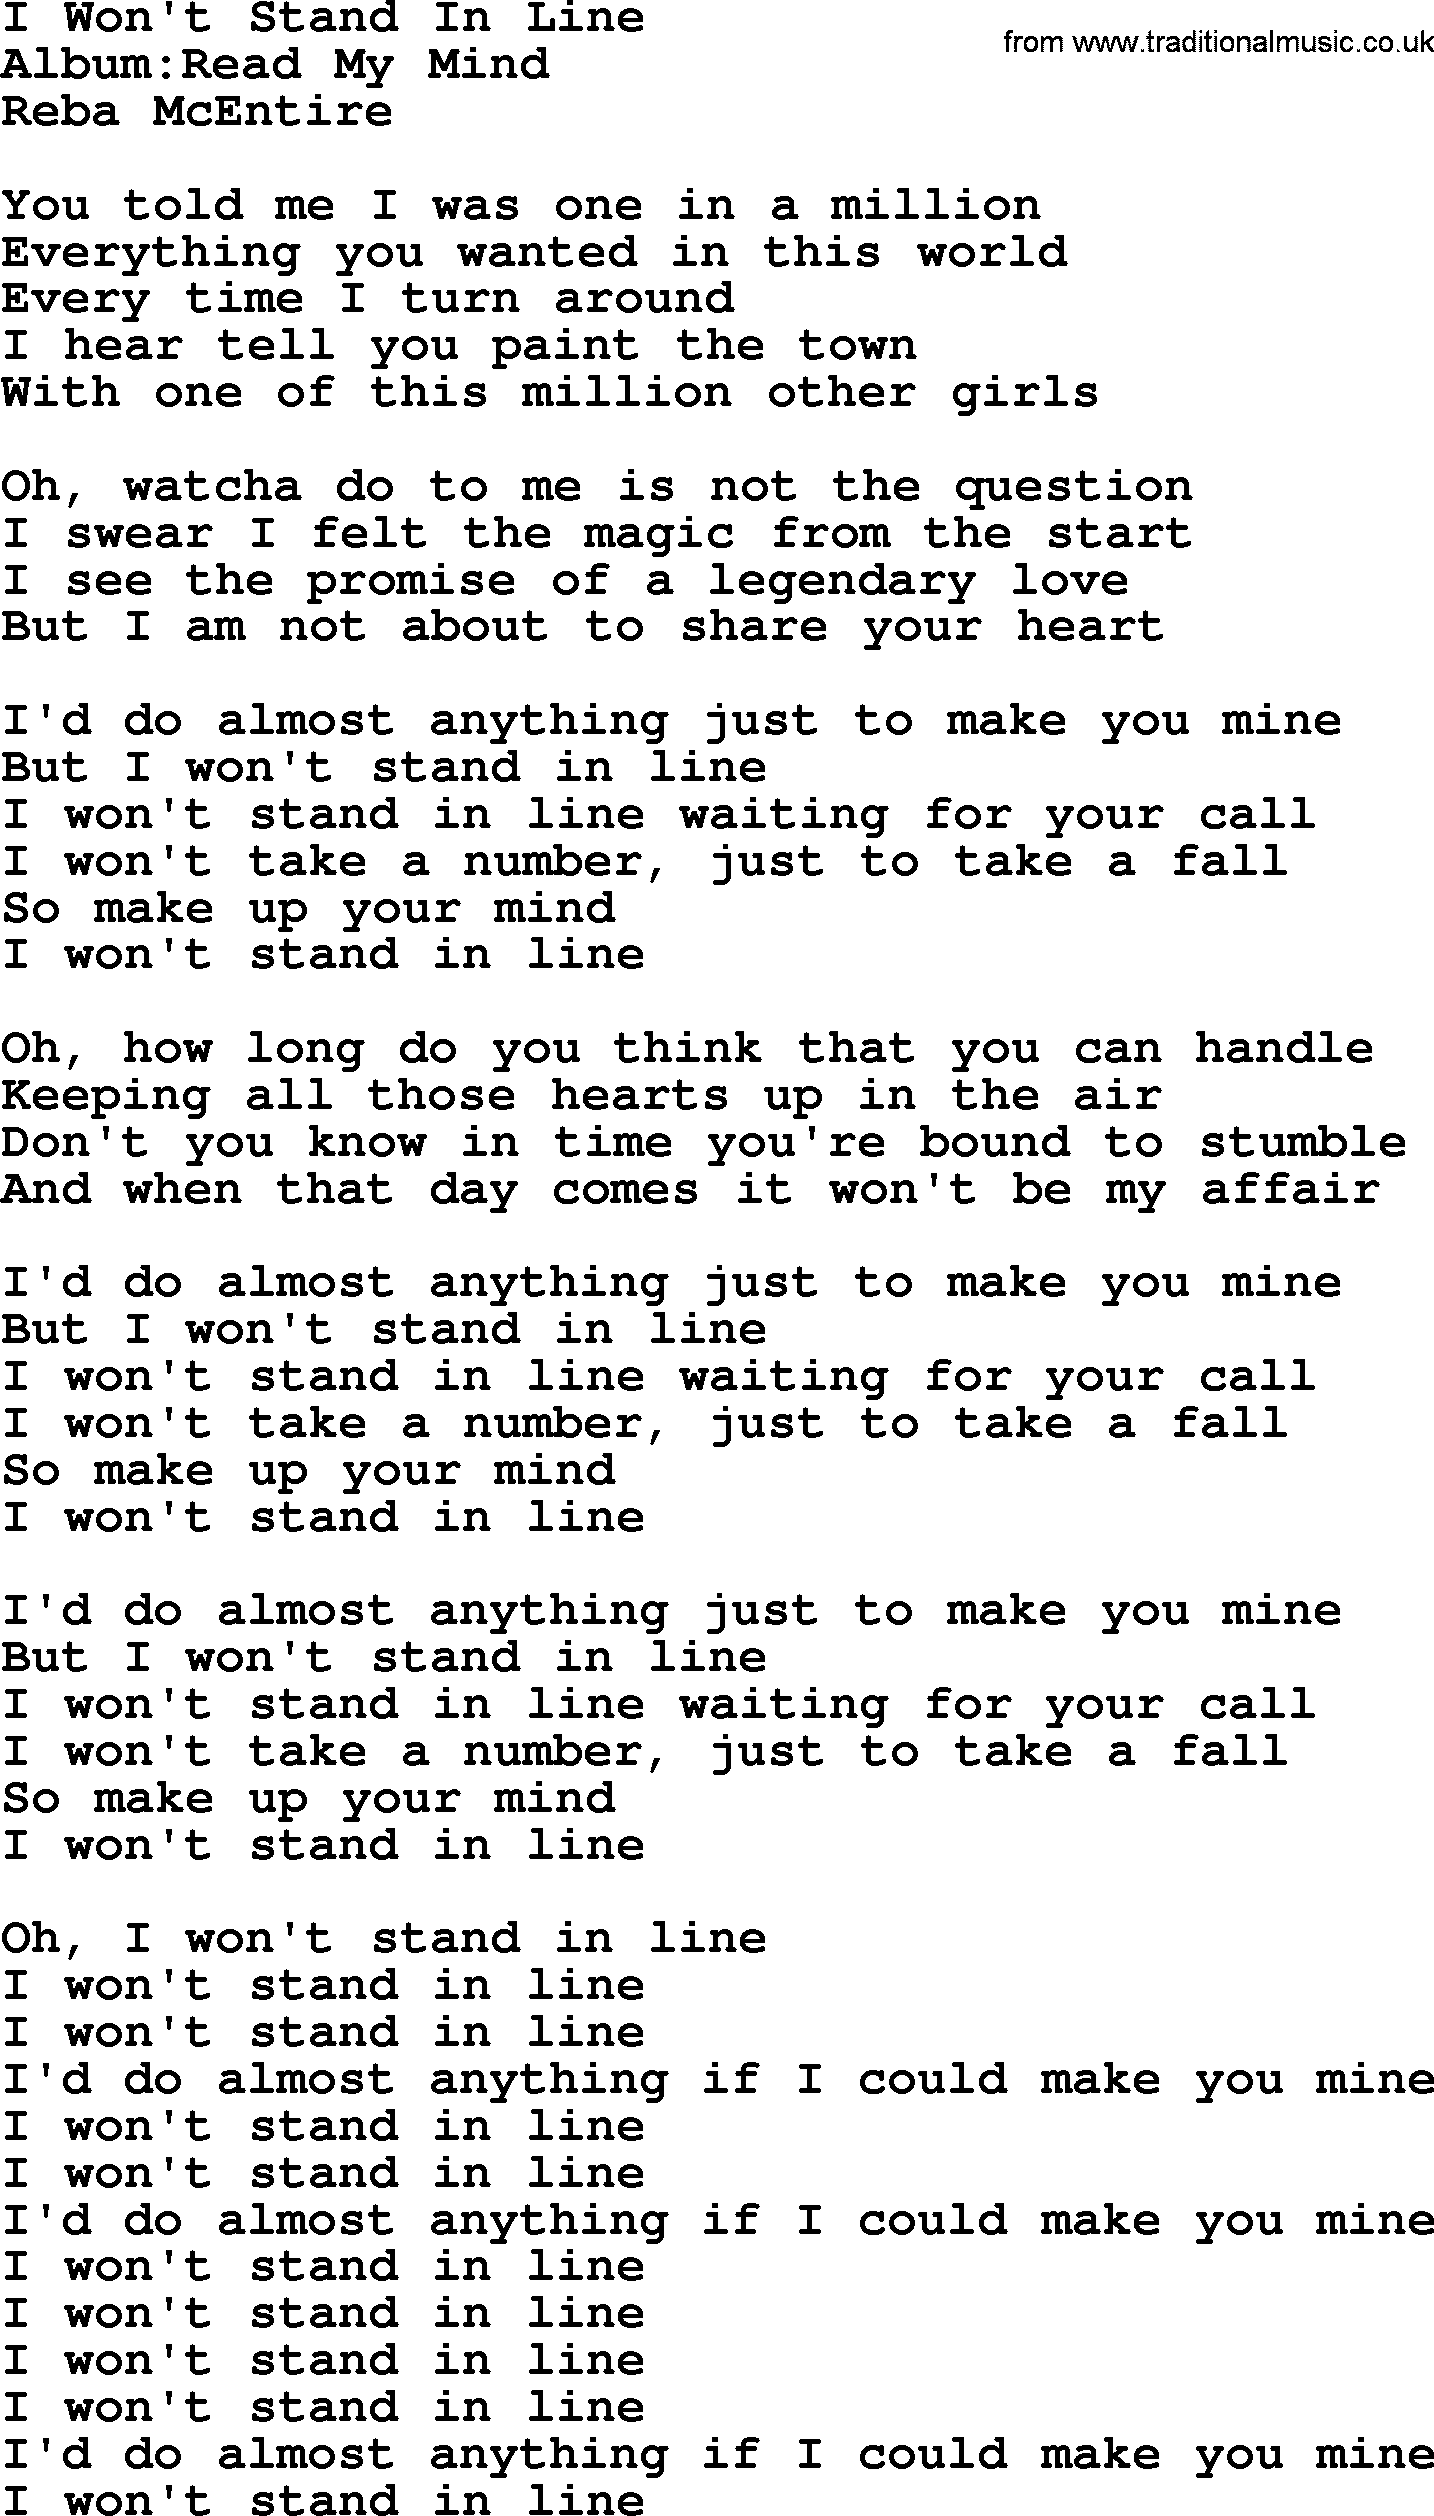 Reba McEntire song: I Won't Stand In Line lyrics